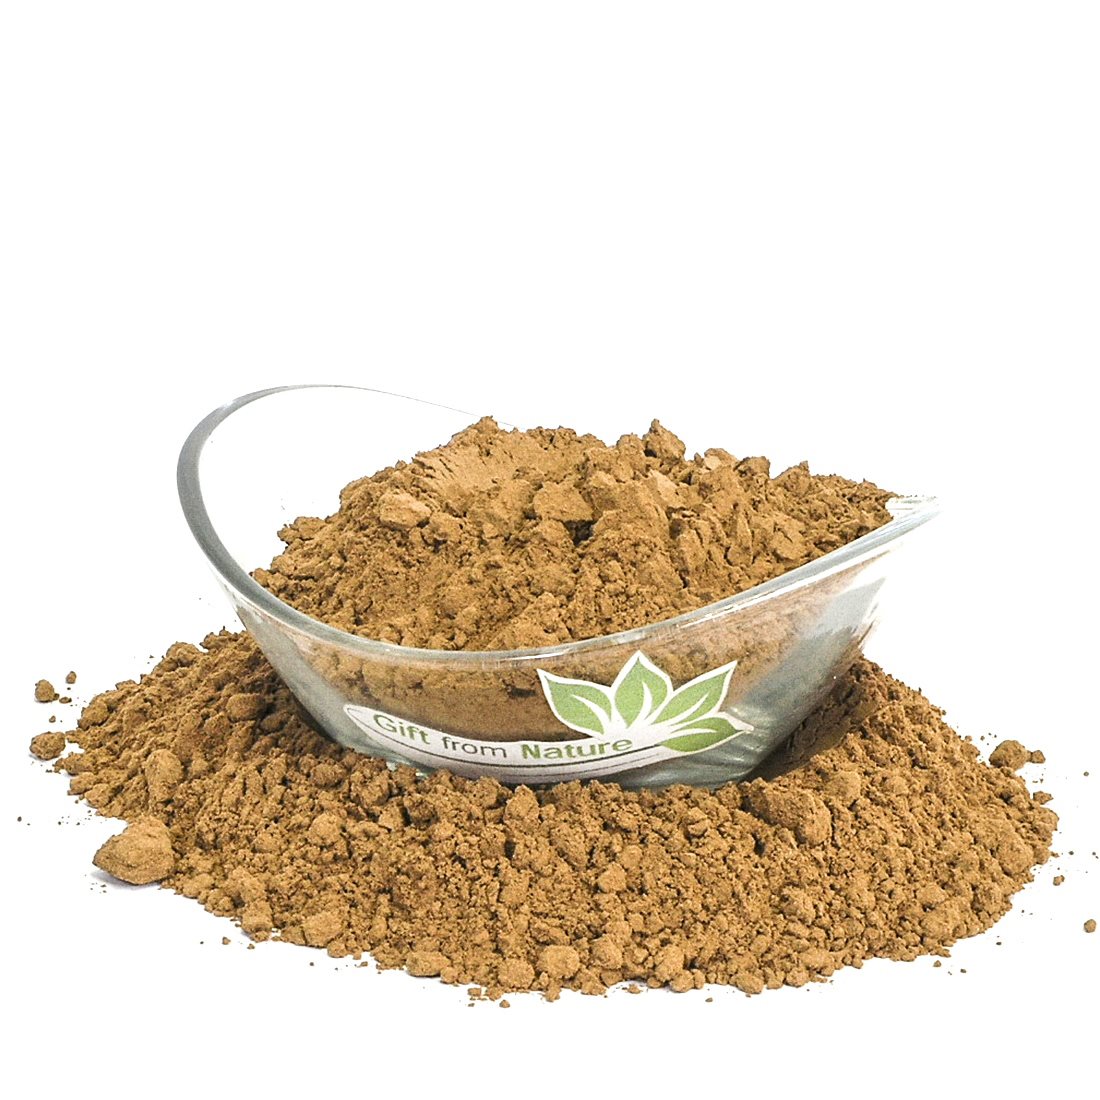 GUARANA Seeds Powder